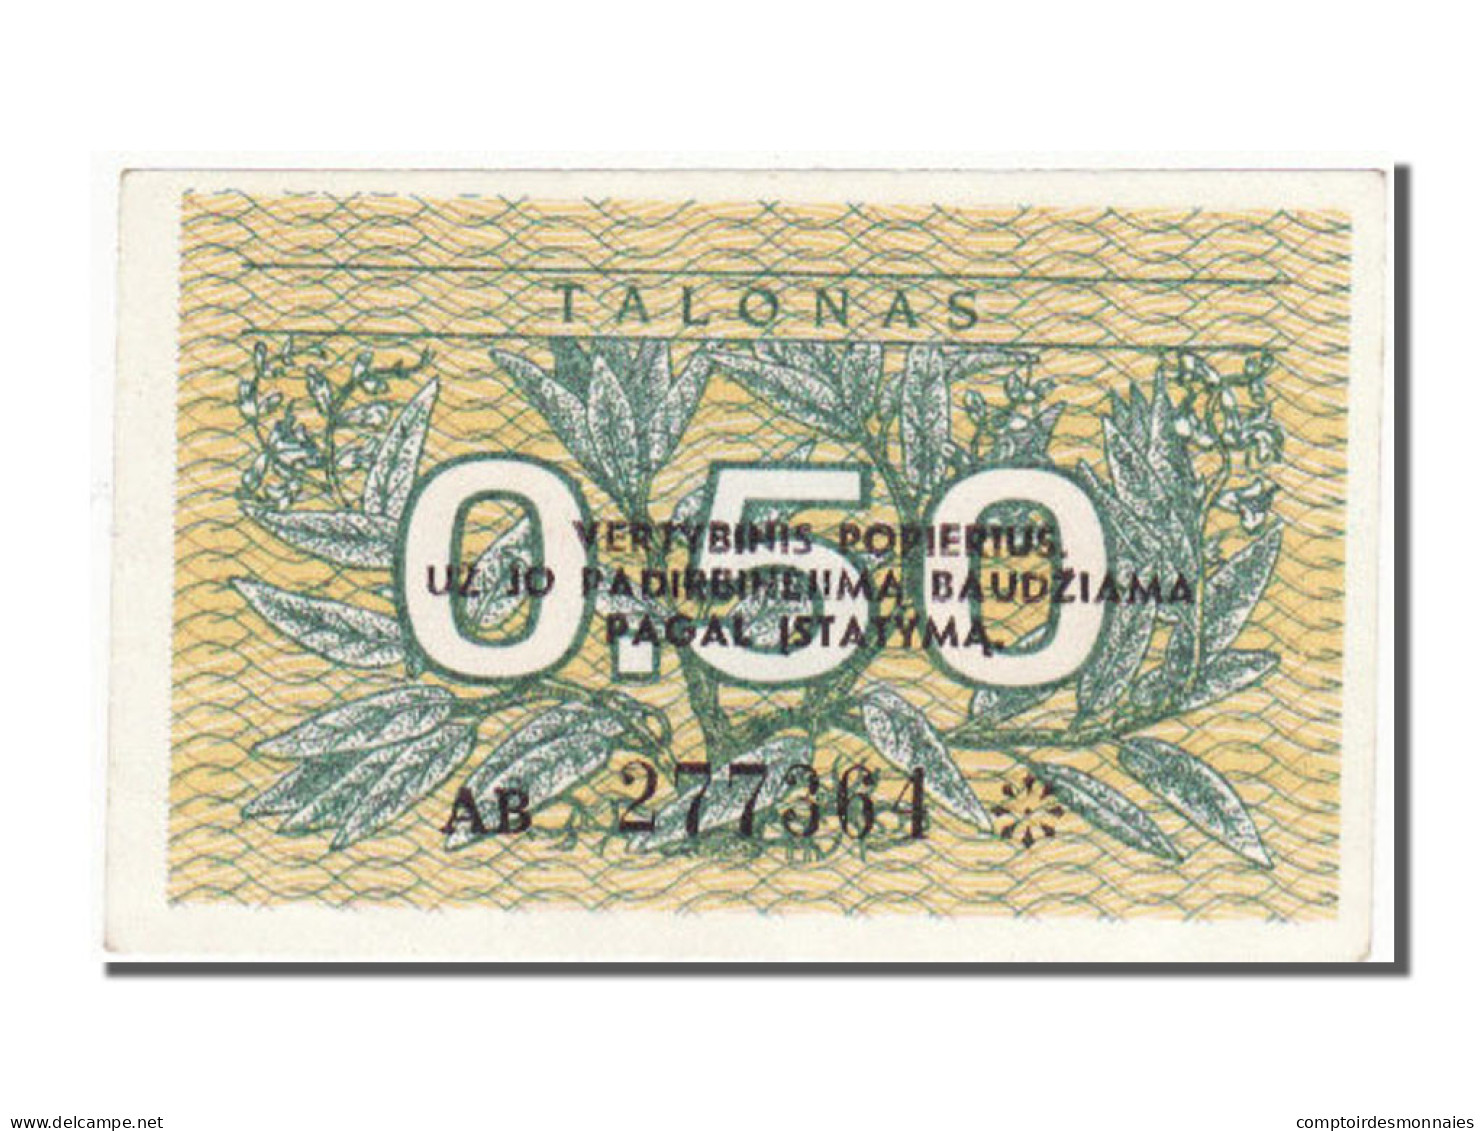 Billet, Lithuania, 0.50 Talonas, 1991, NEUF - Litouwen